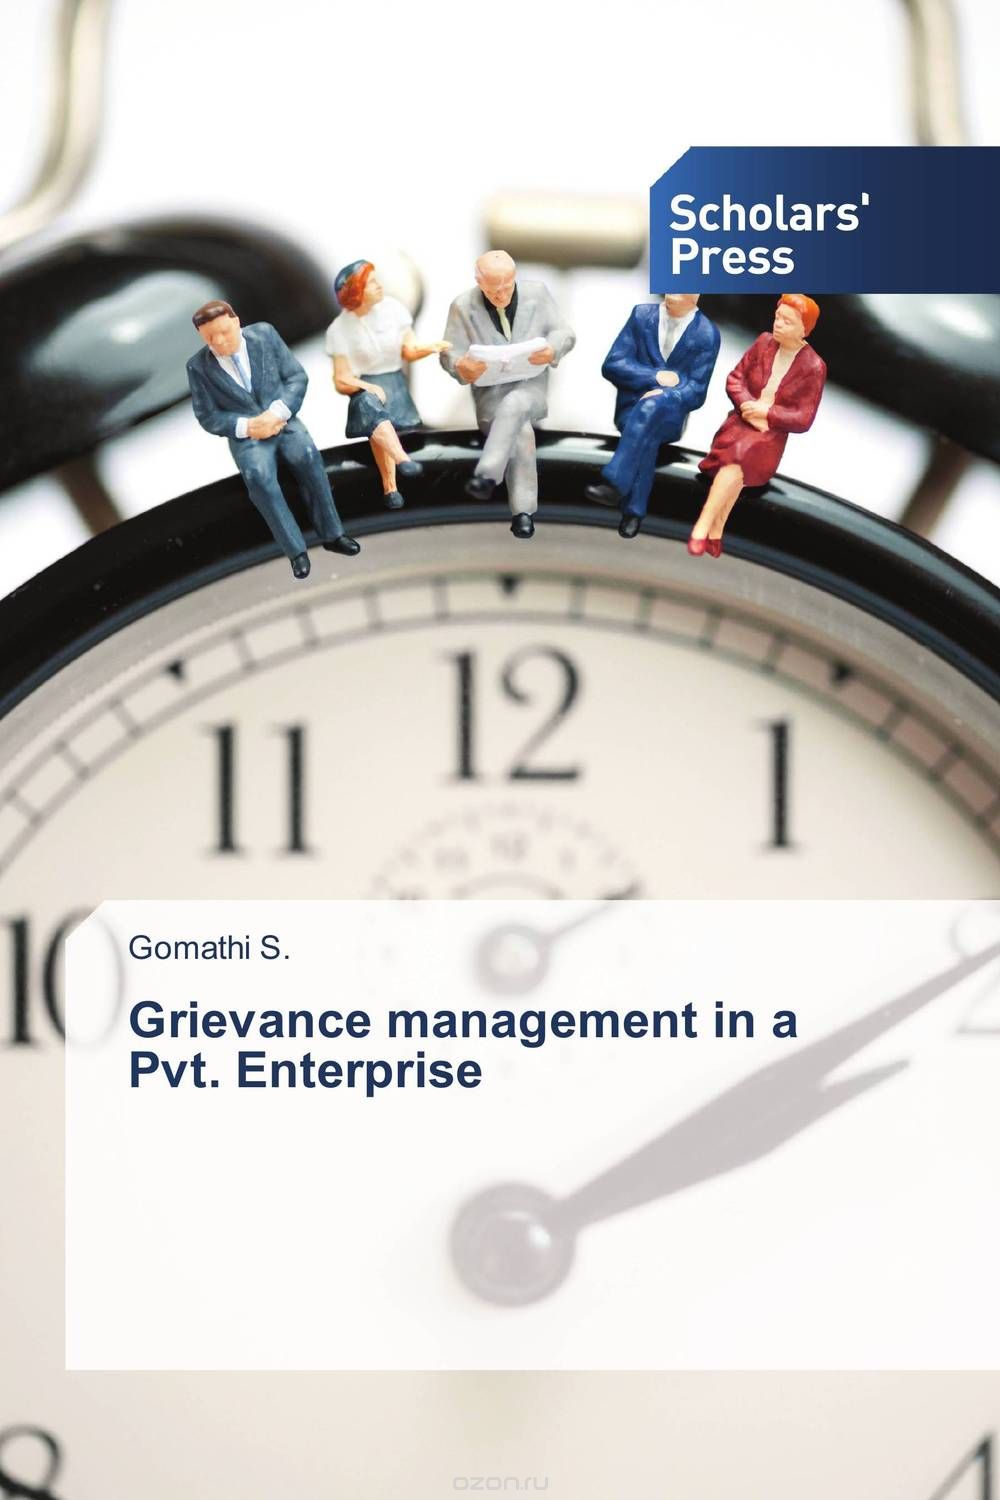 Скачать книгу "Grievance management in a Pvt. Enterprise"